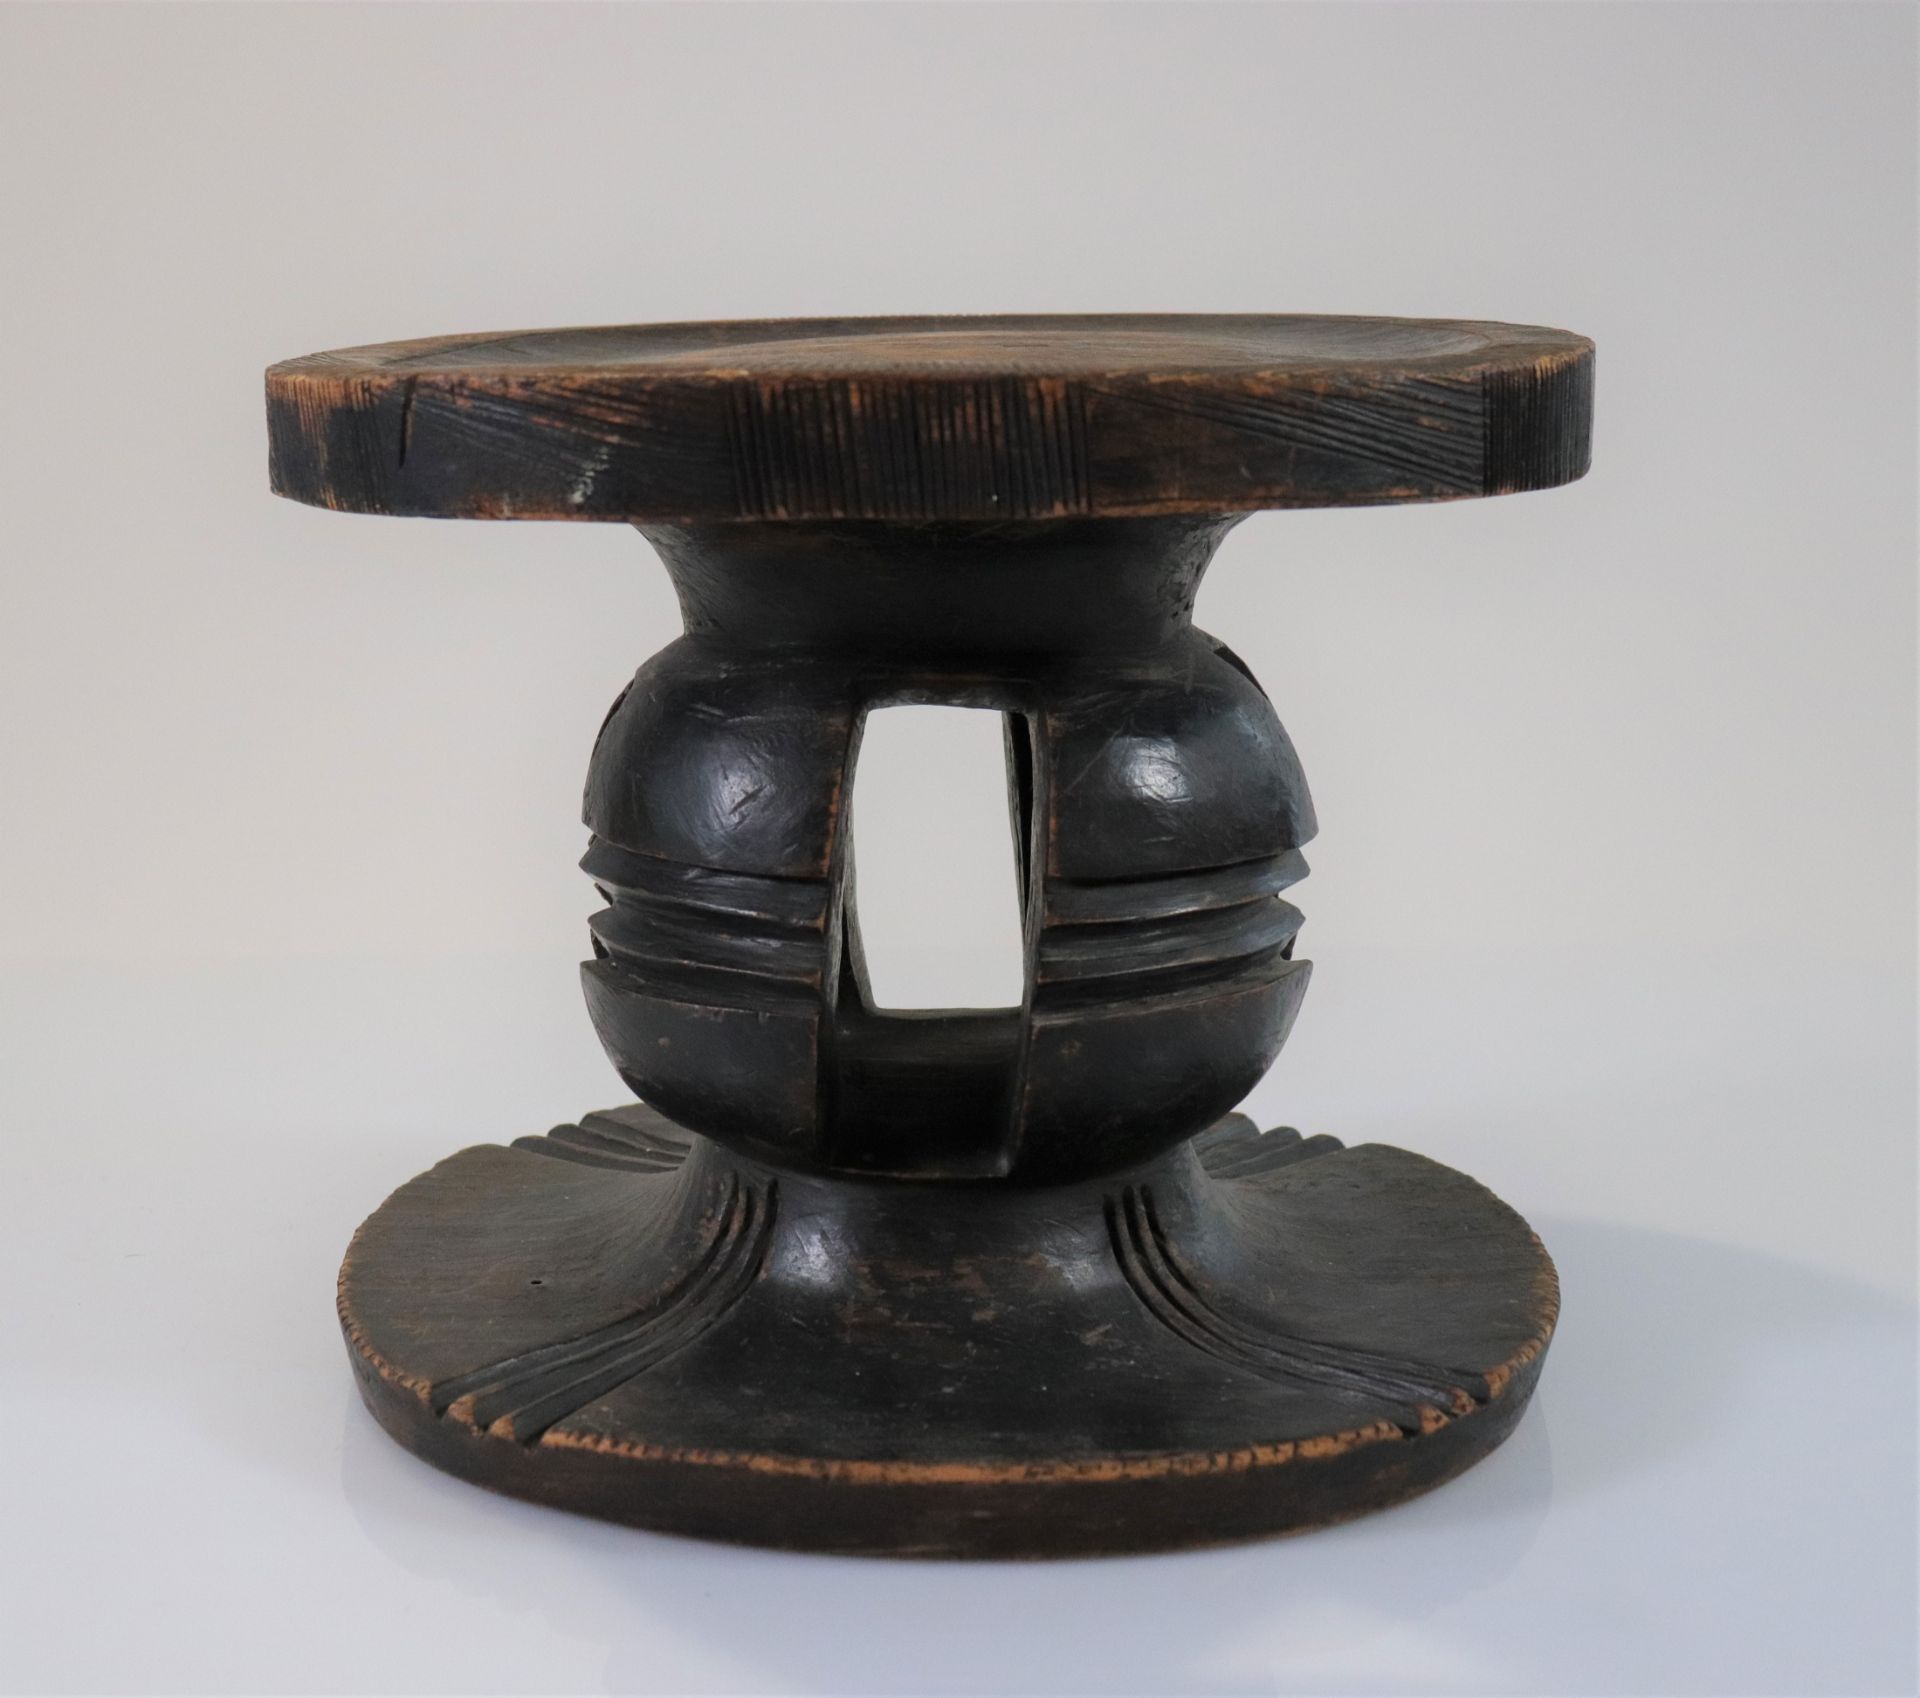 Mangbetu. (DR Congo) Old stool - Bild 2 aus 4